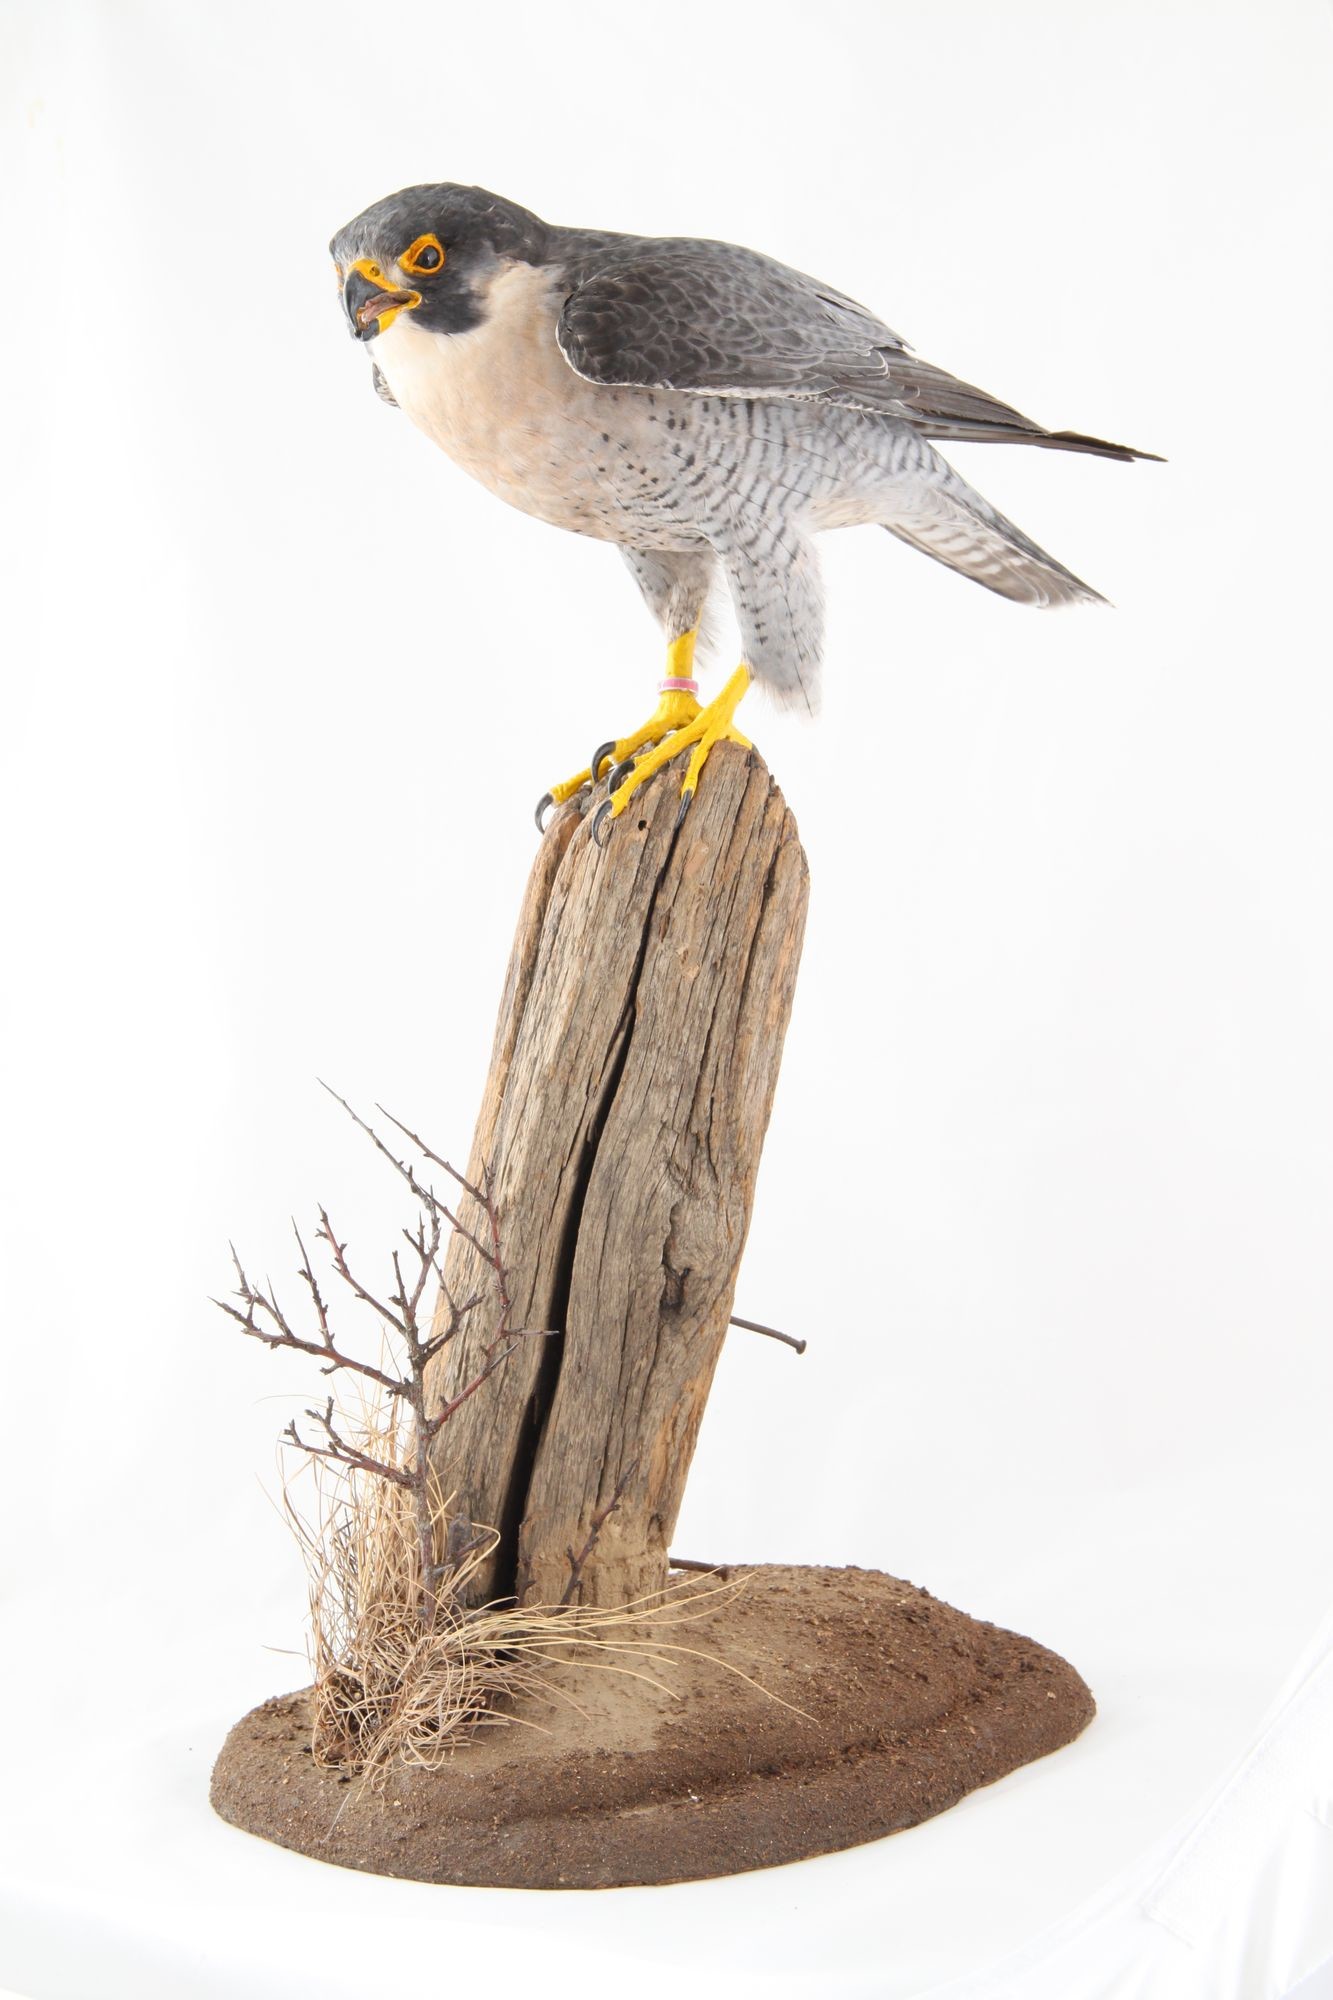 Vándorsólyom hím (falco peregrinus) (Rippl-Rónai Múzeum CC BY-NC-SA)